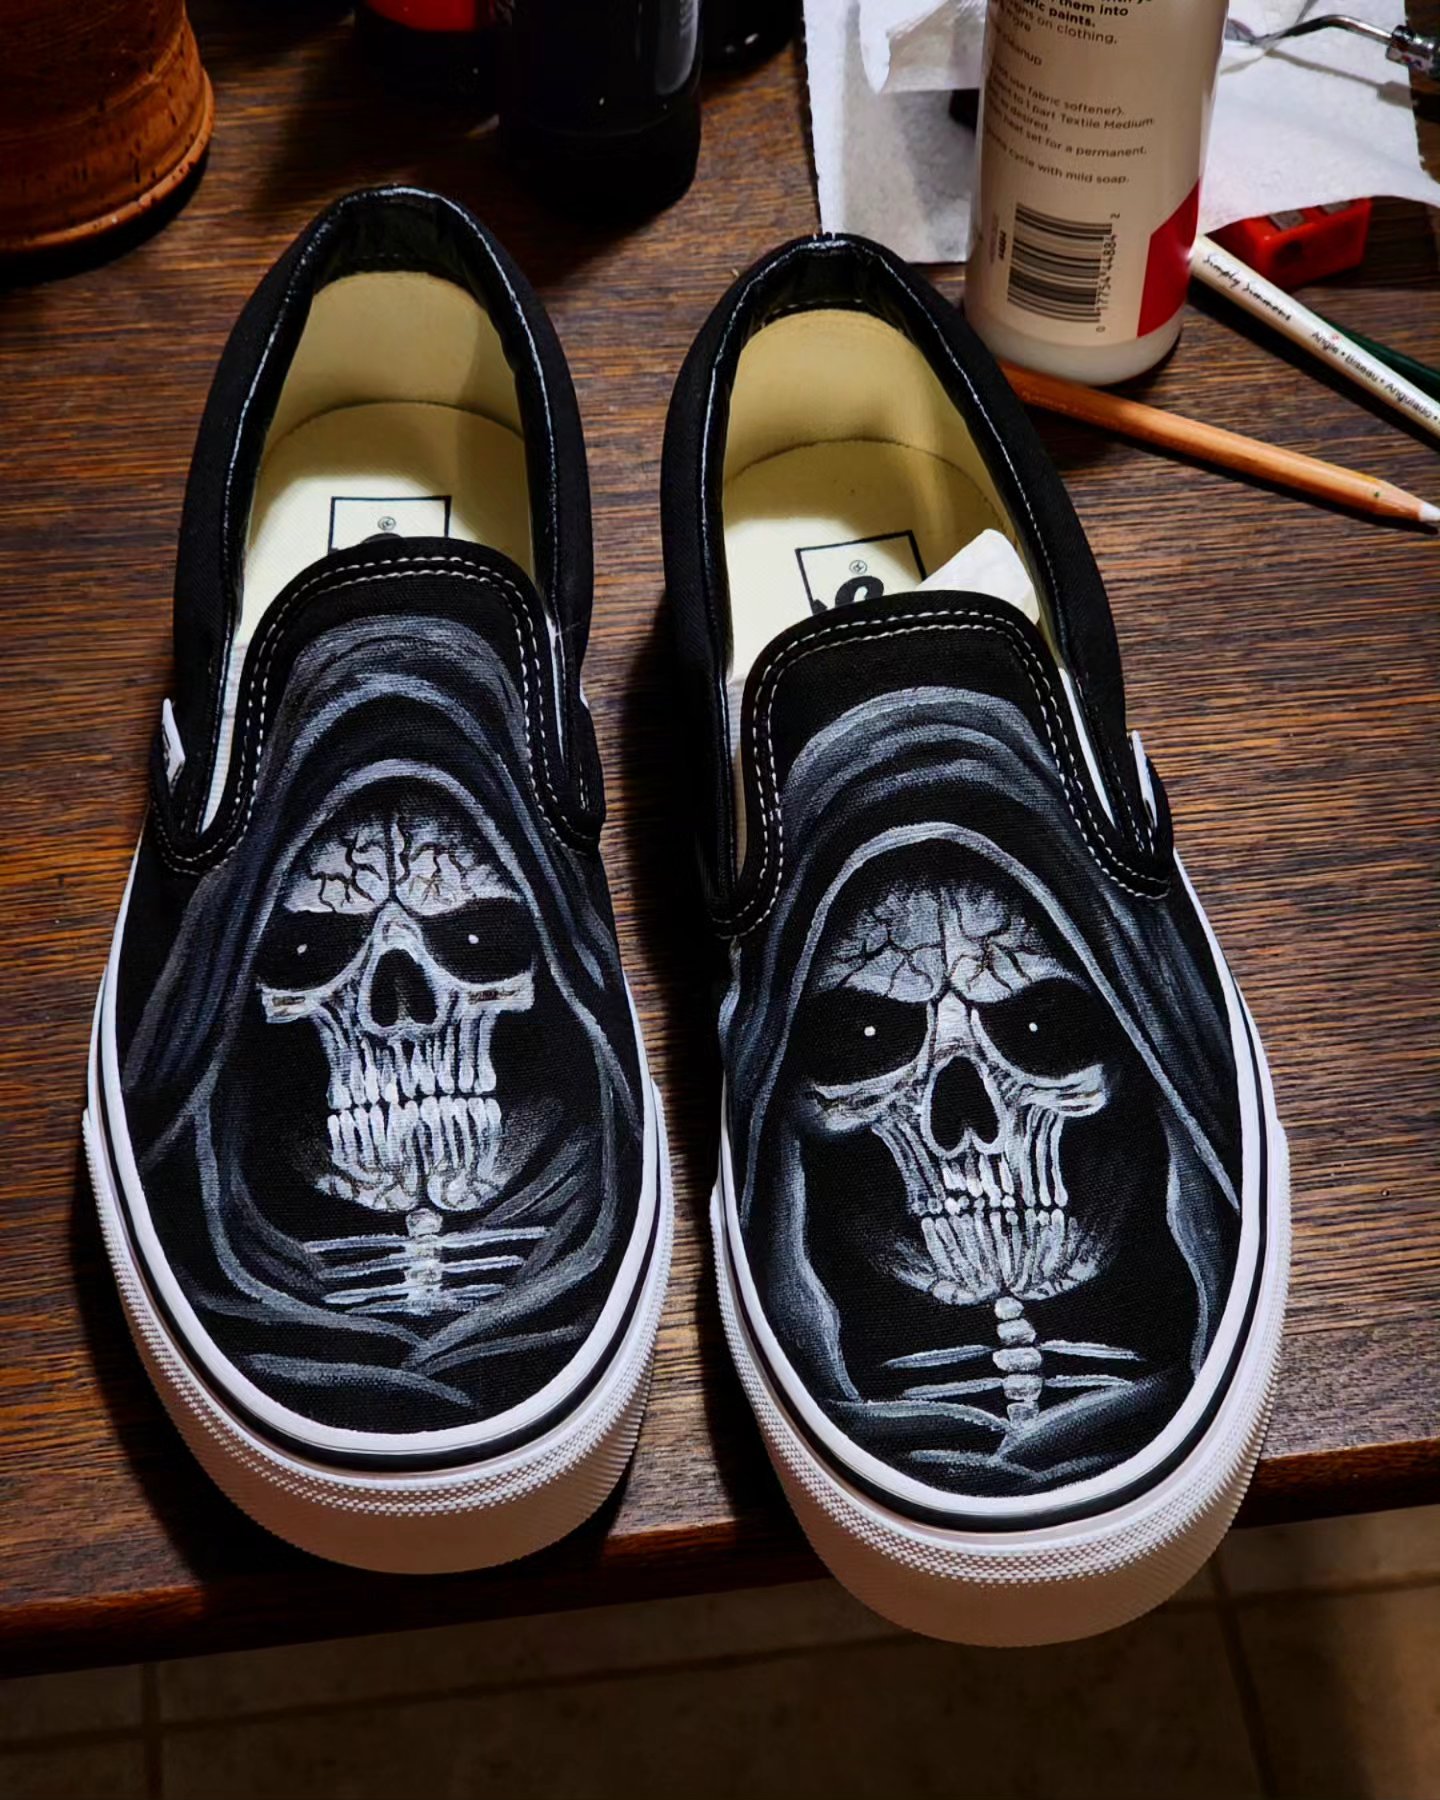 Handpainted brand new Vans Shoes with grim reaper design. Size: 9.5 US men’s. Size: 11 US women's